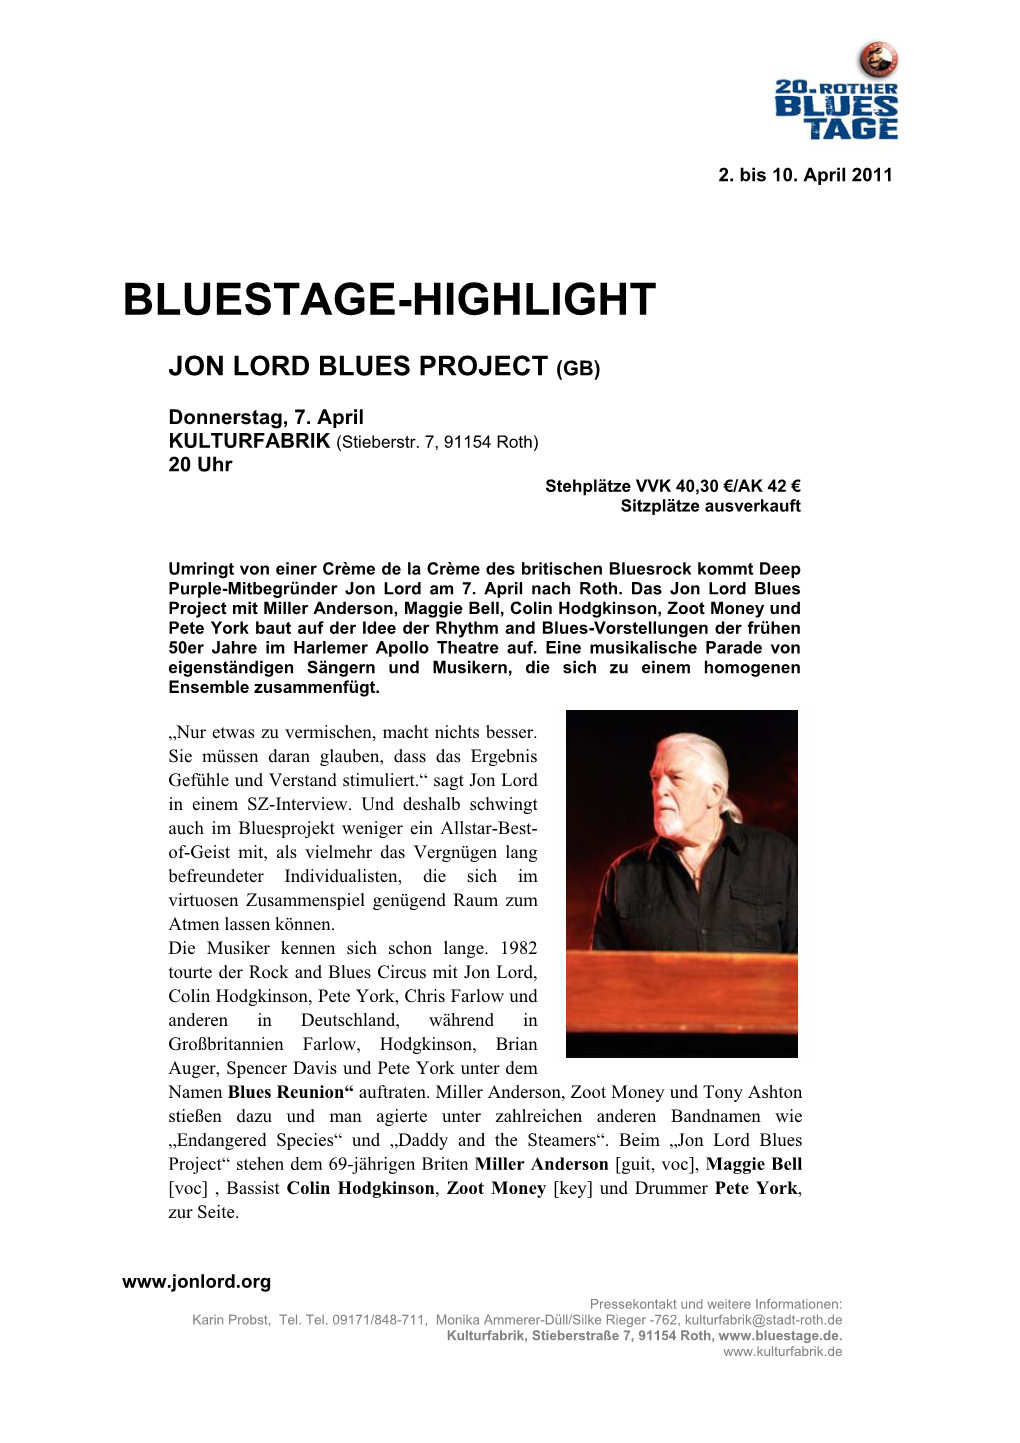 Bluestage-Highlight Jon Lord Blues Project